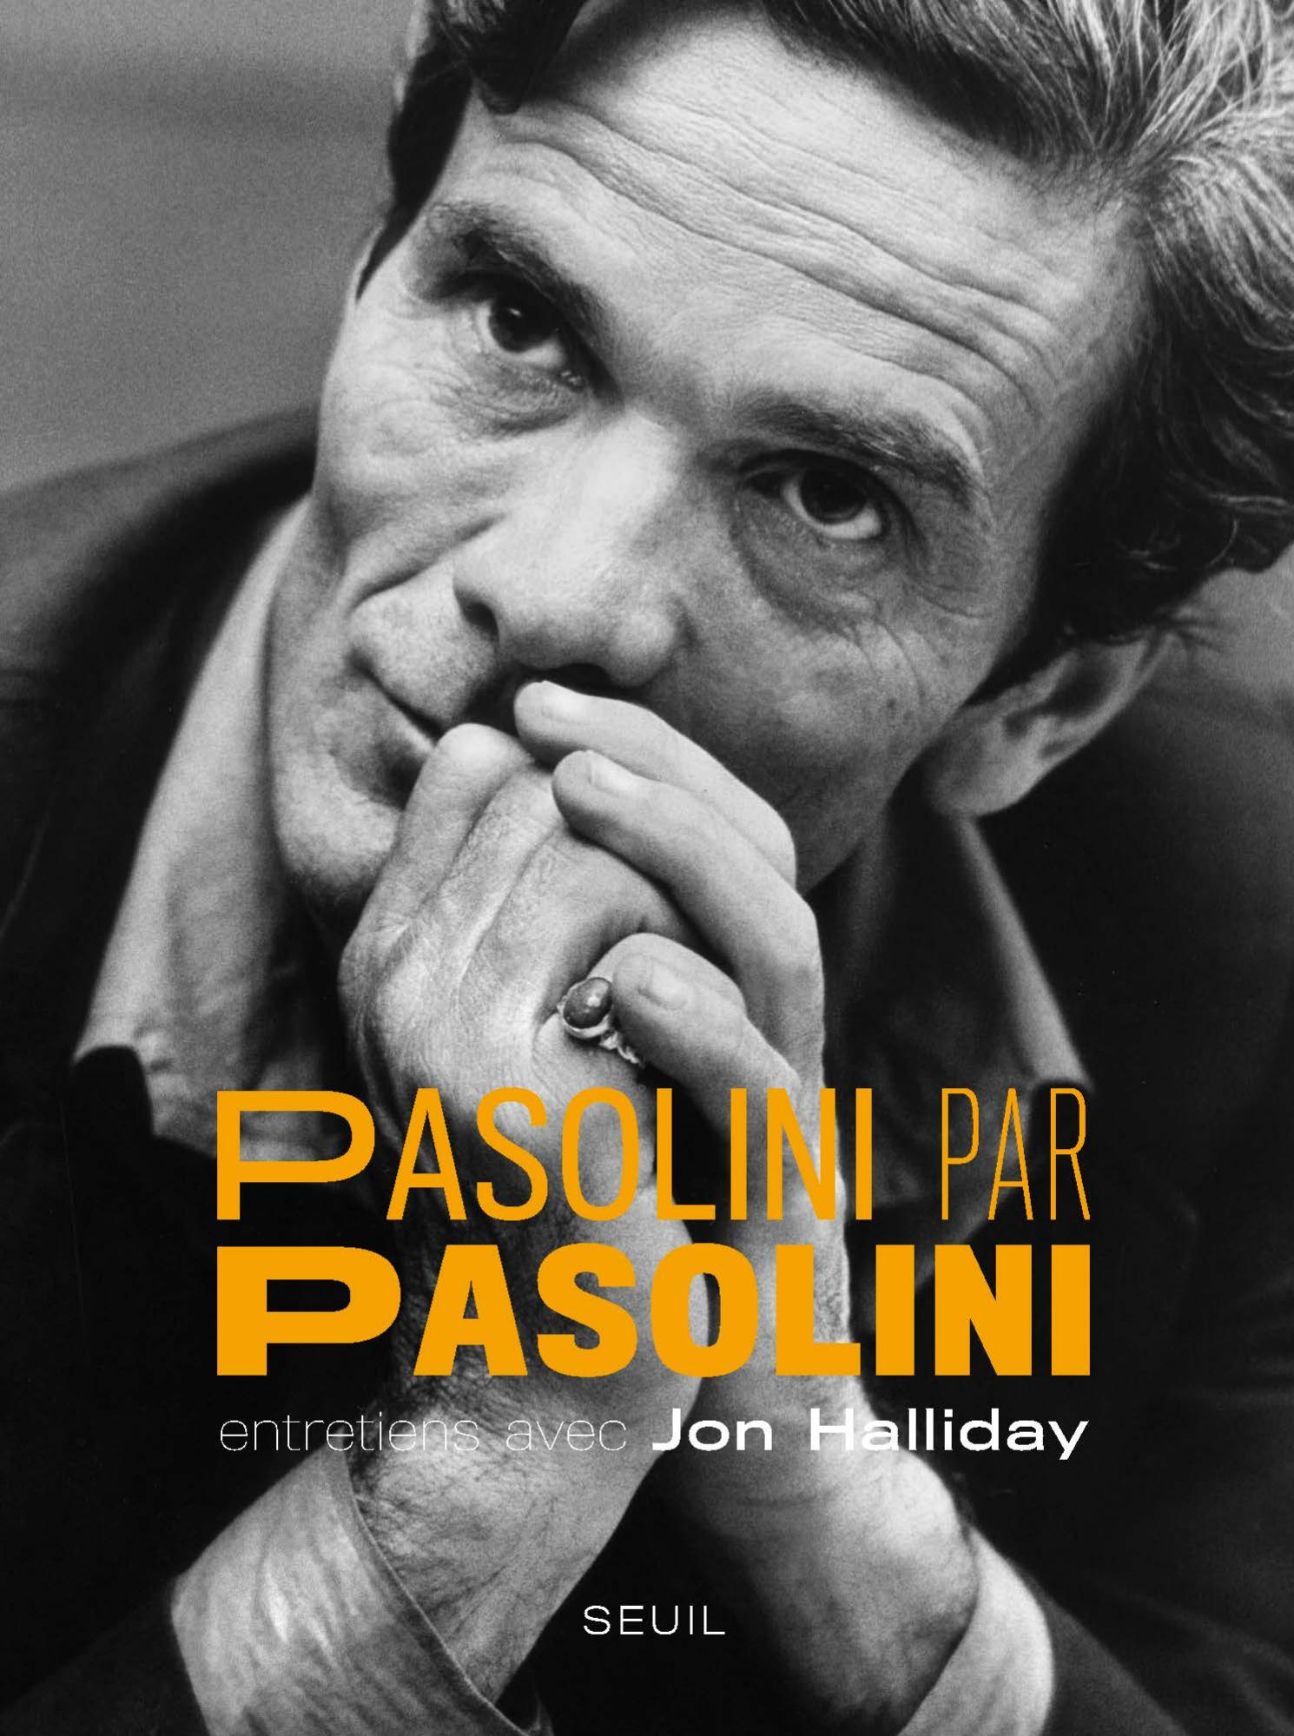 Jon Halliday, Pasolini par Pasolini